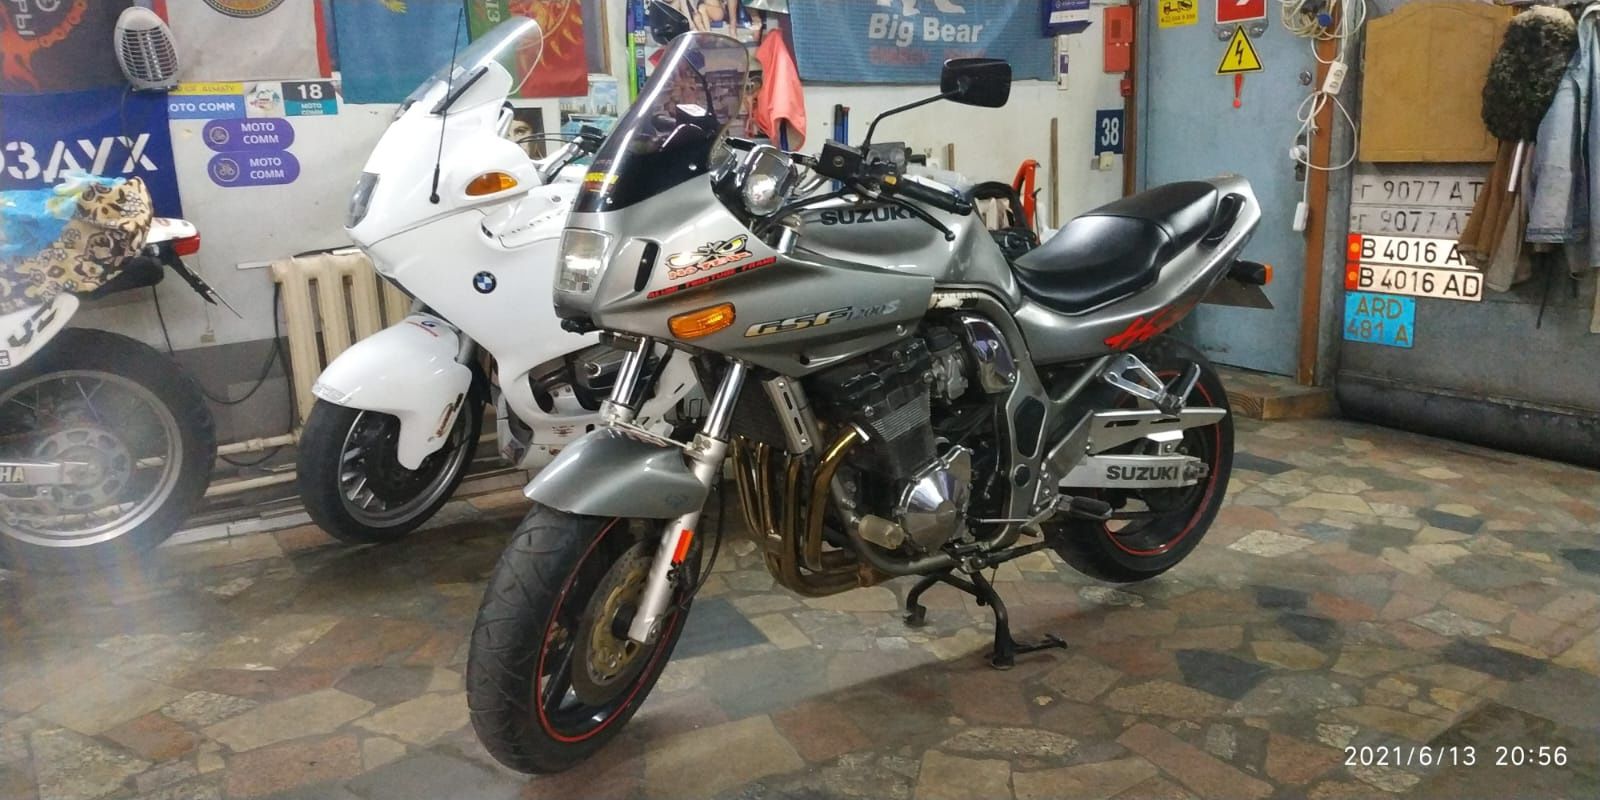 Поменяю или продам мотоцикл SUZUKI GSF 1200 S, БАНДИТ, 1997г,